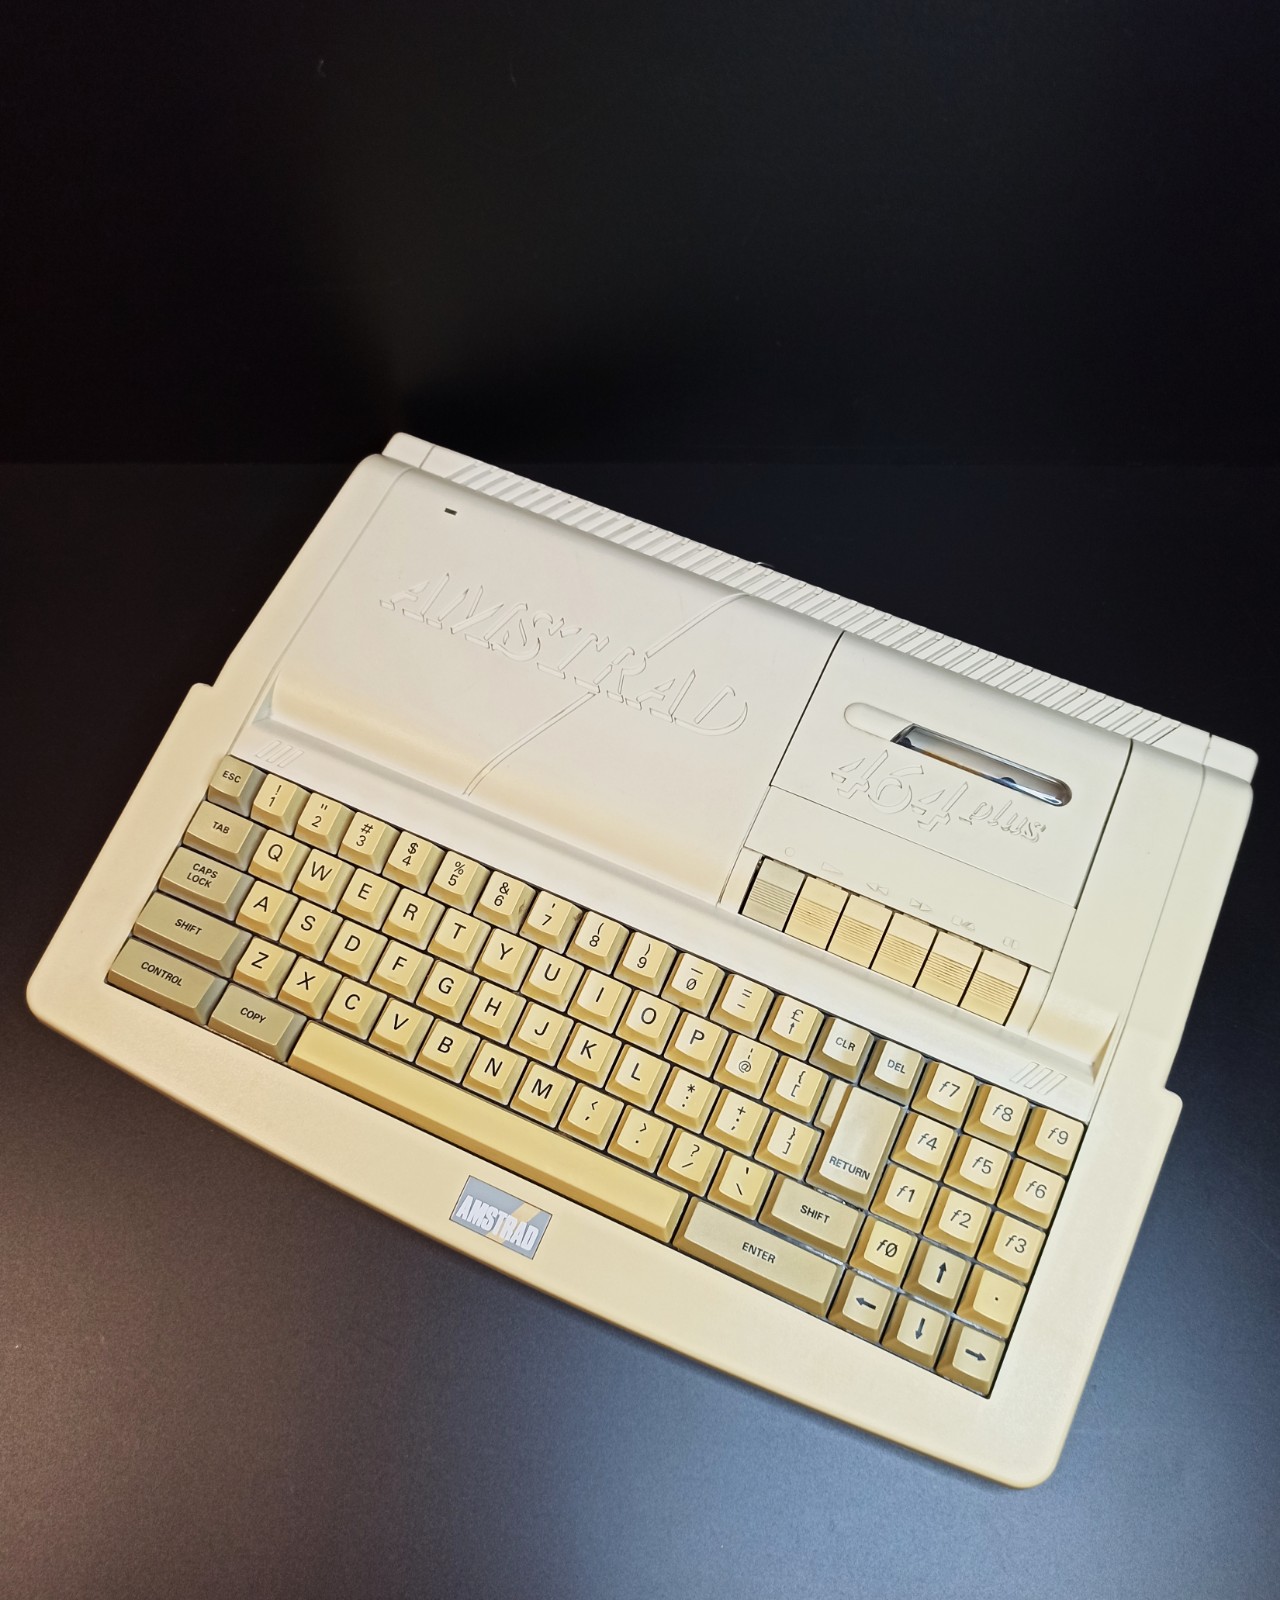 Amstrad cpc 646plus